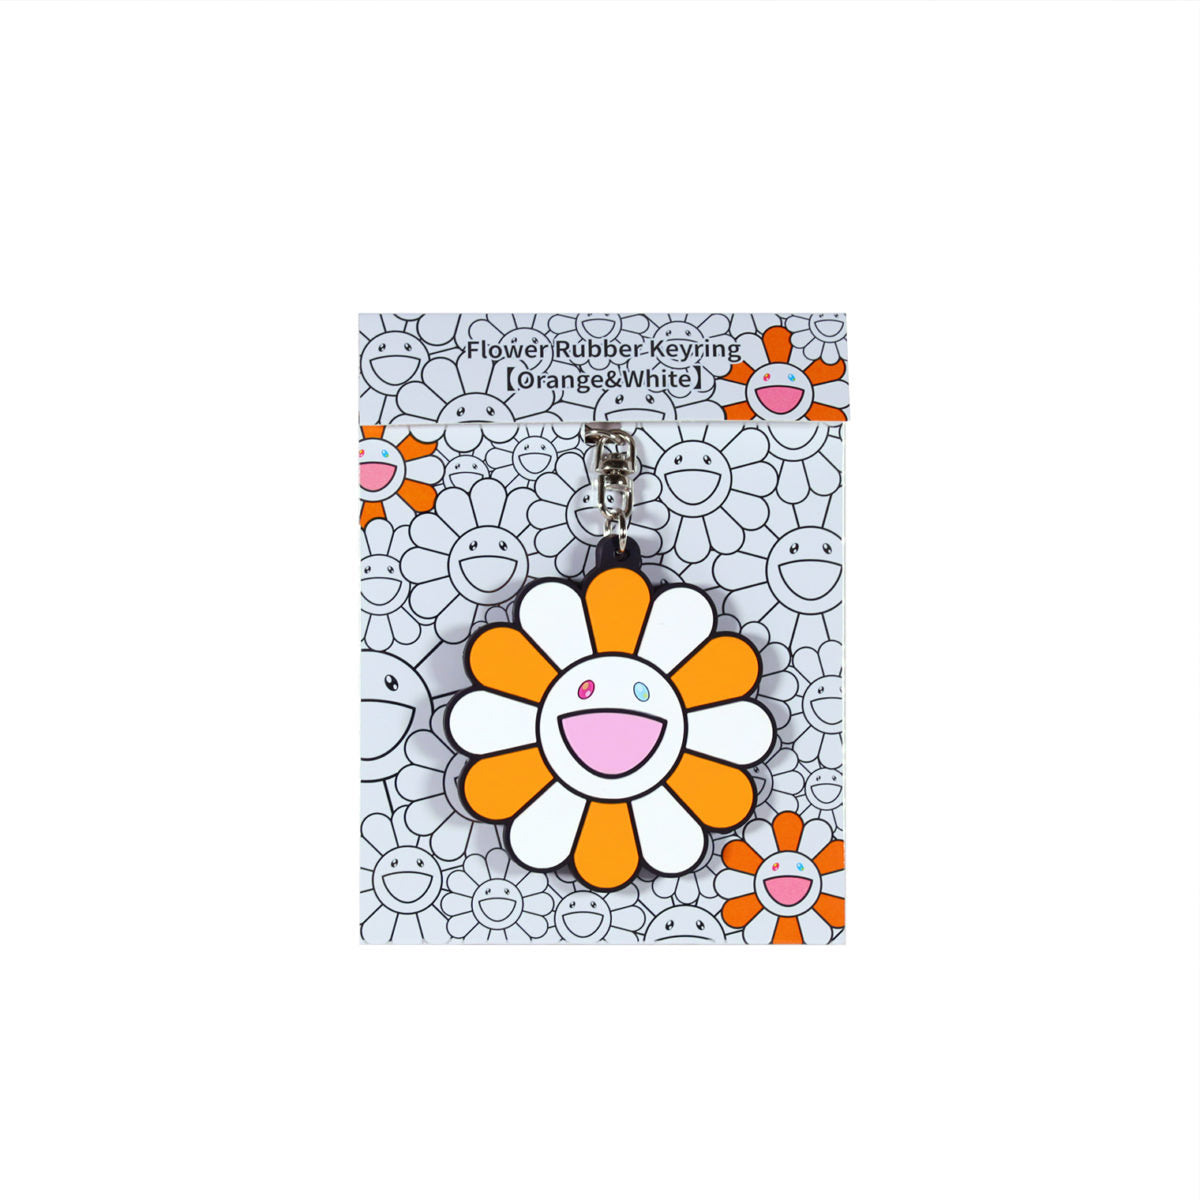 TAKASHI MURAKAMI - Flower Rubber Keyring (Orange and White)